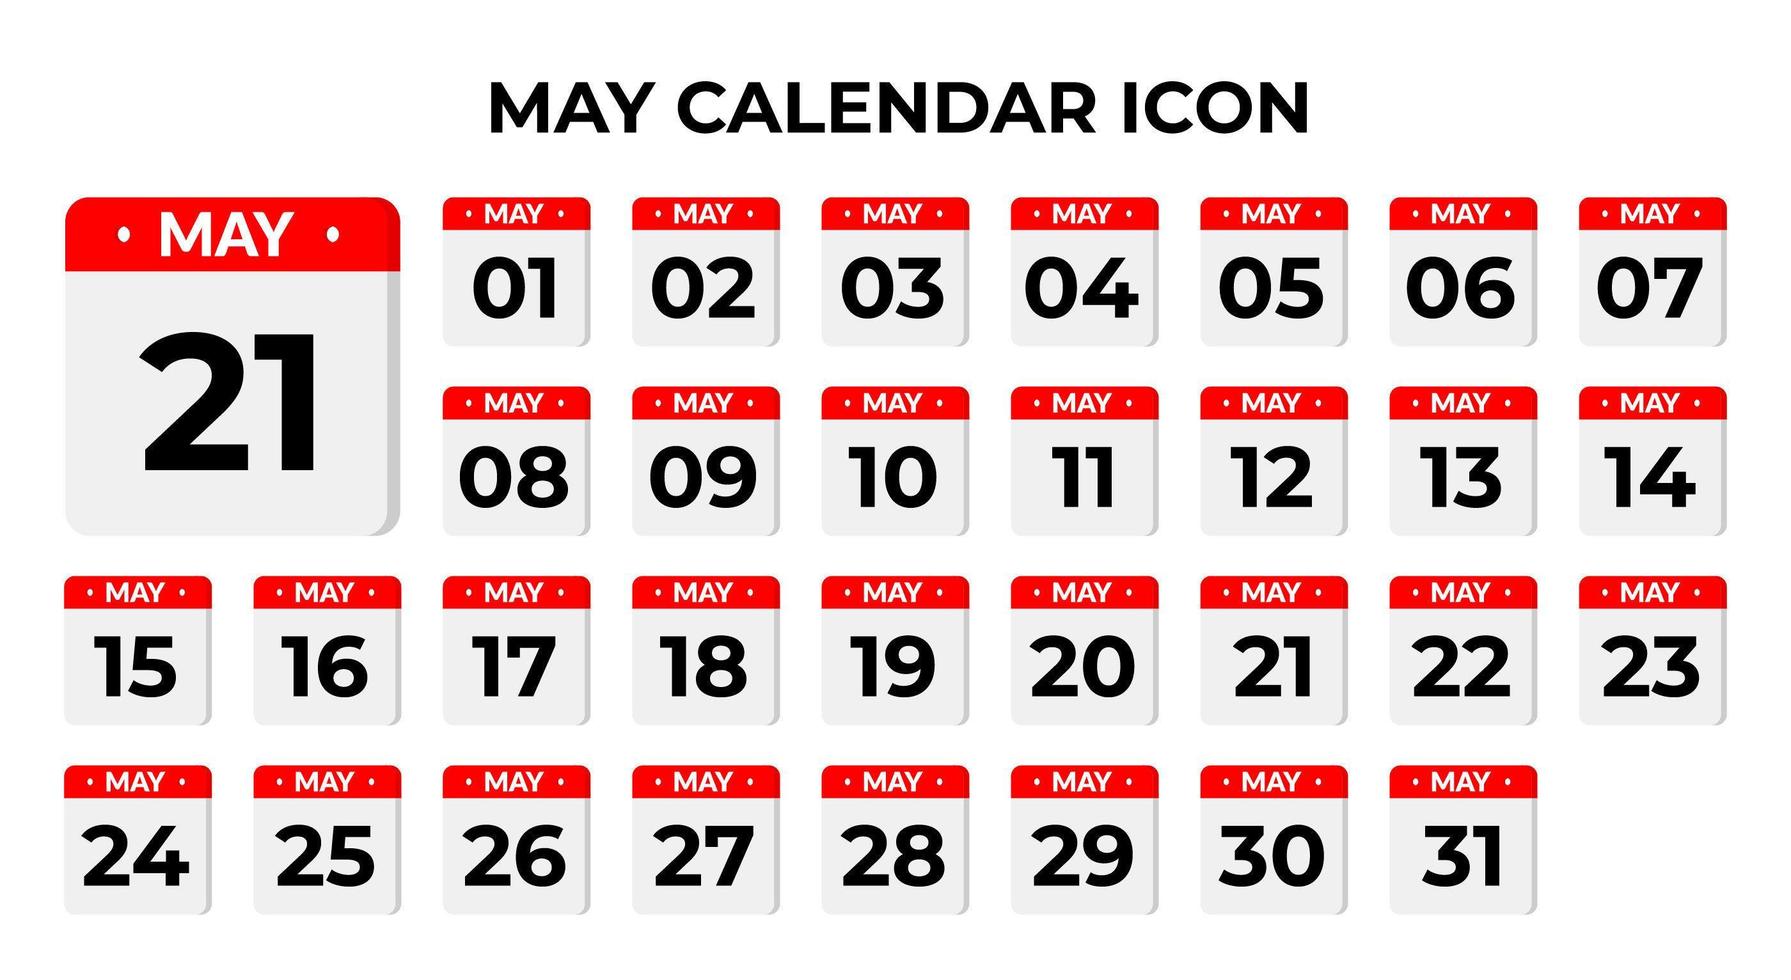 May calendar icons vector